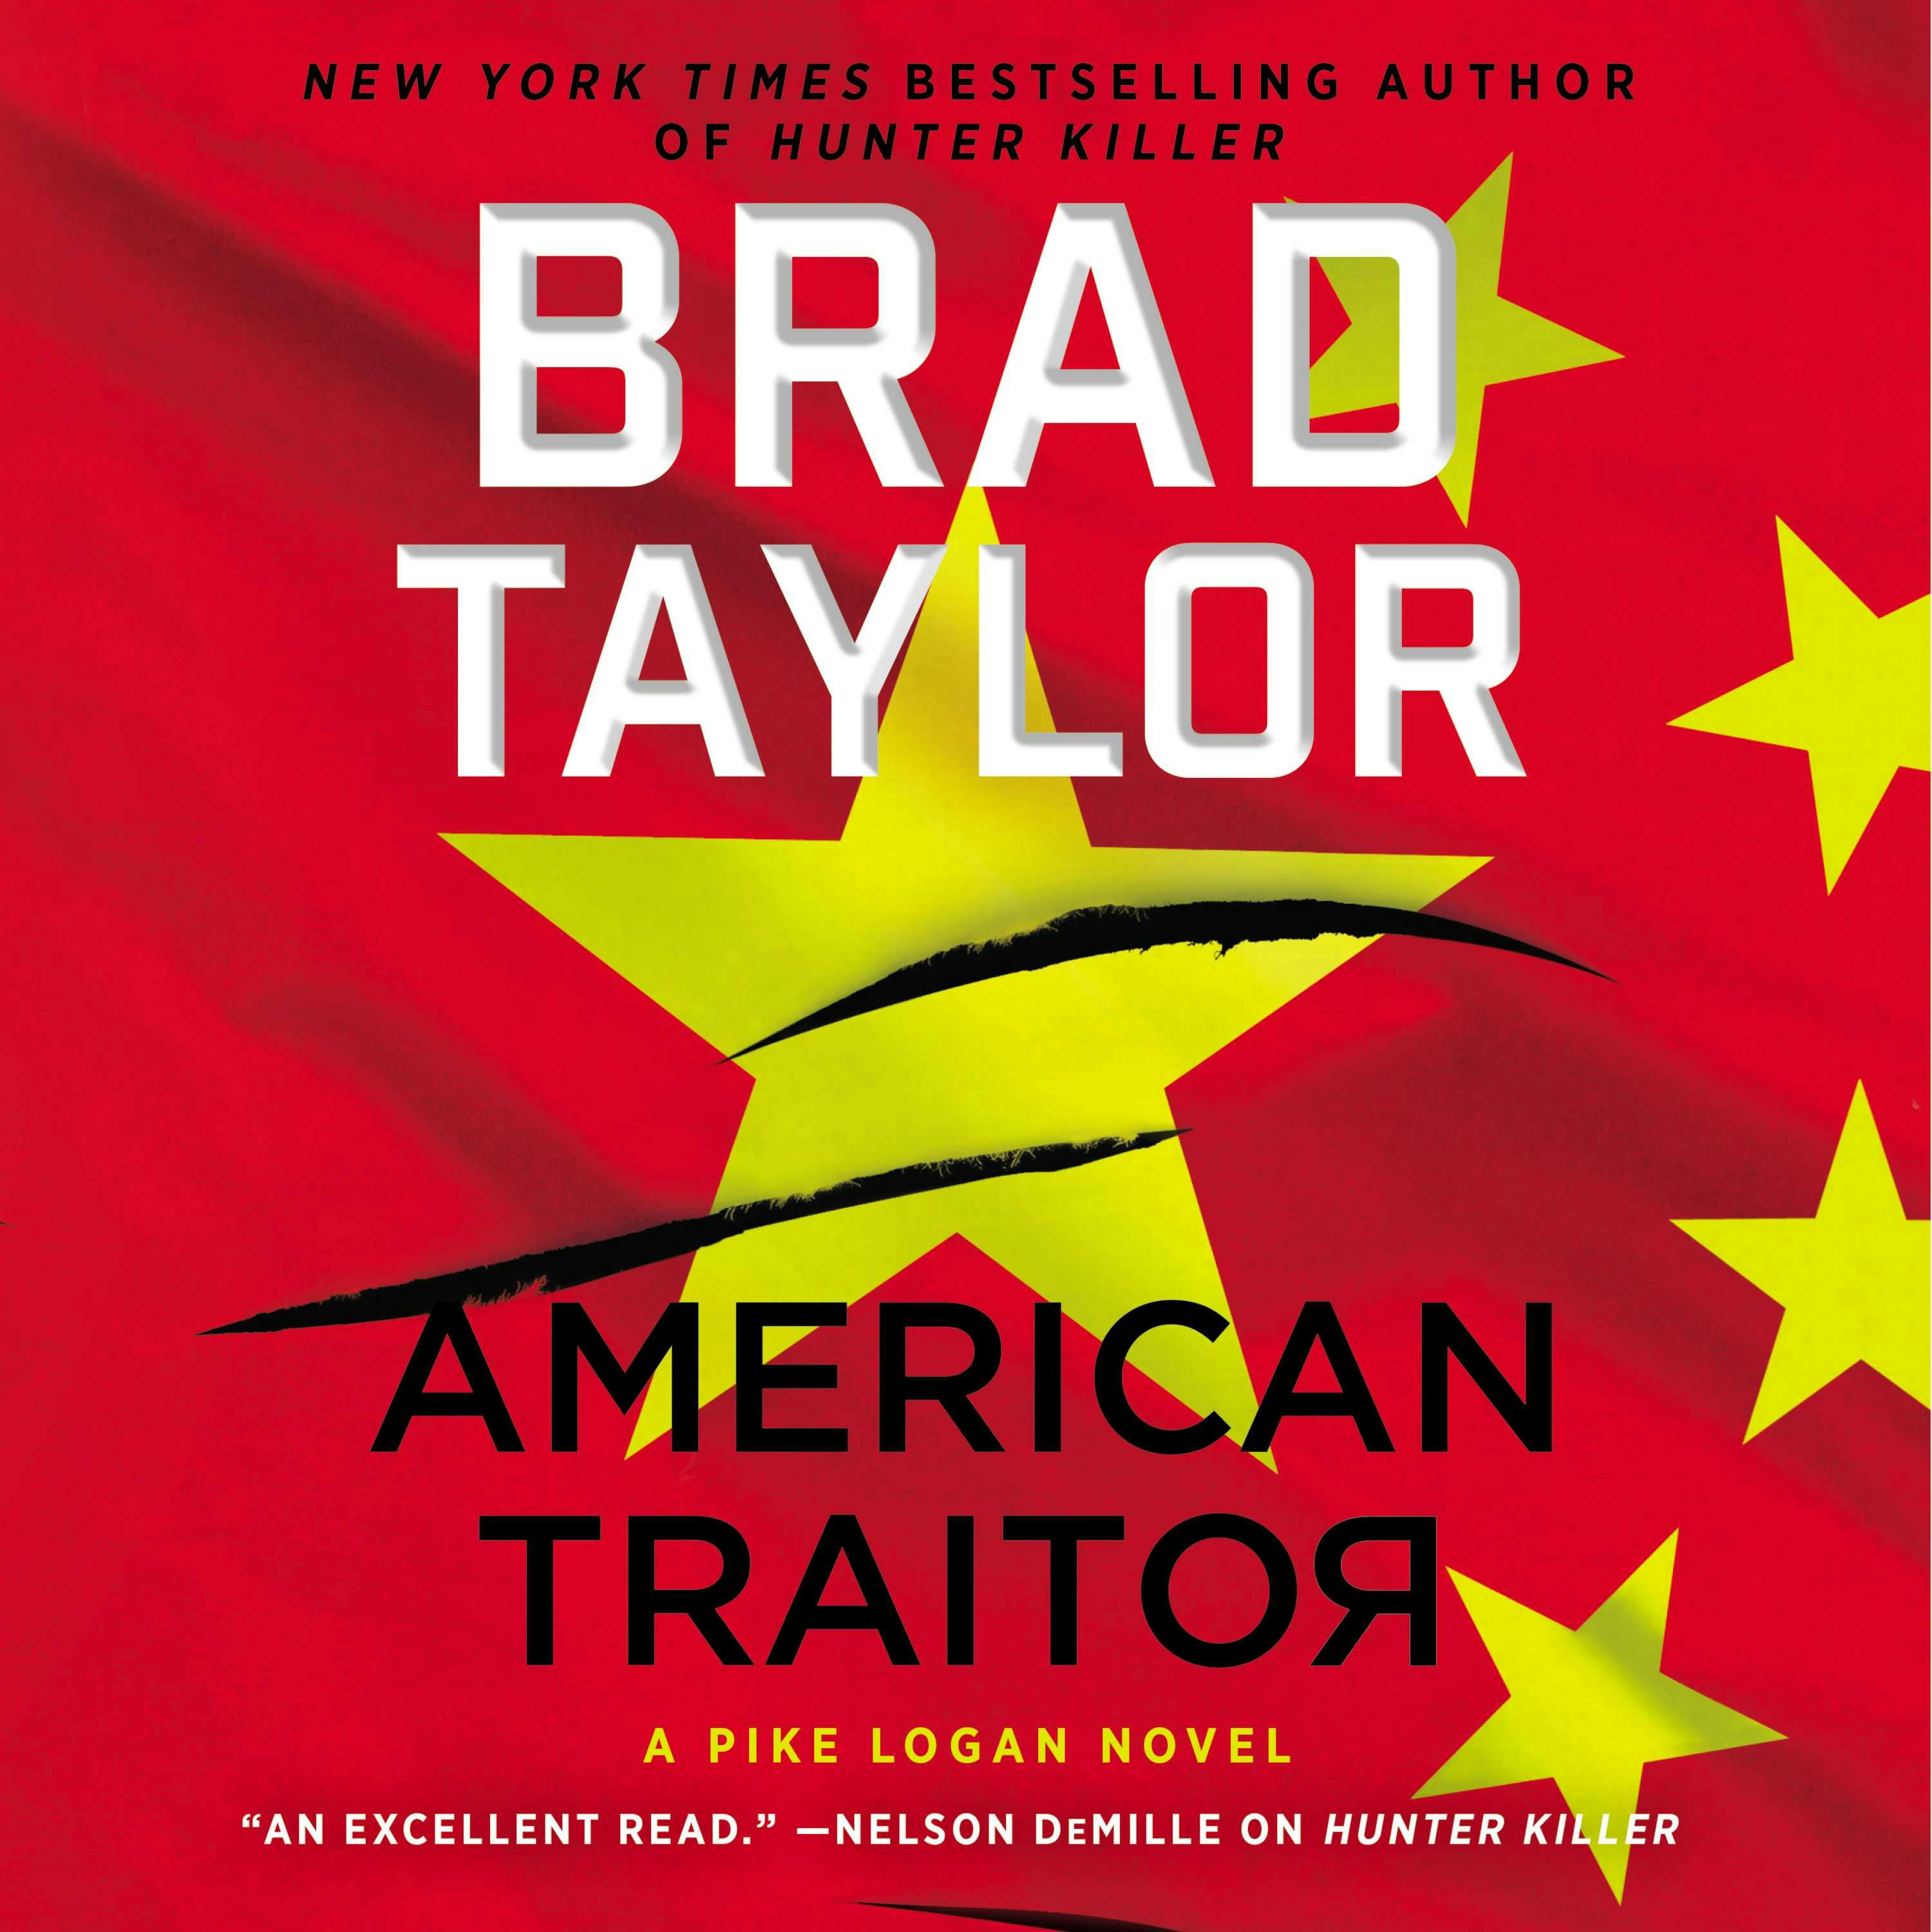 American Traitor: A Pike Logan Novel - Brad Taylor